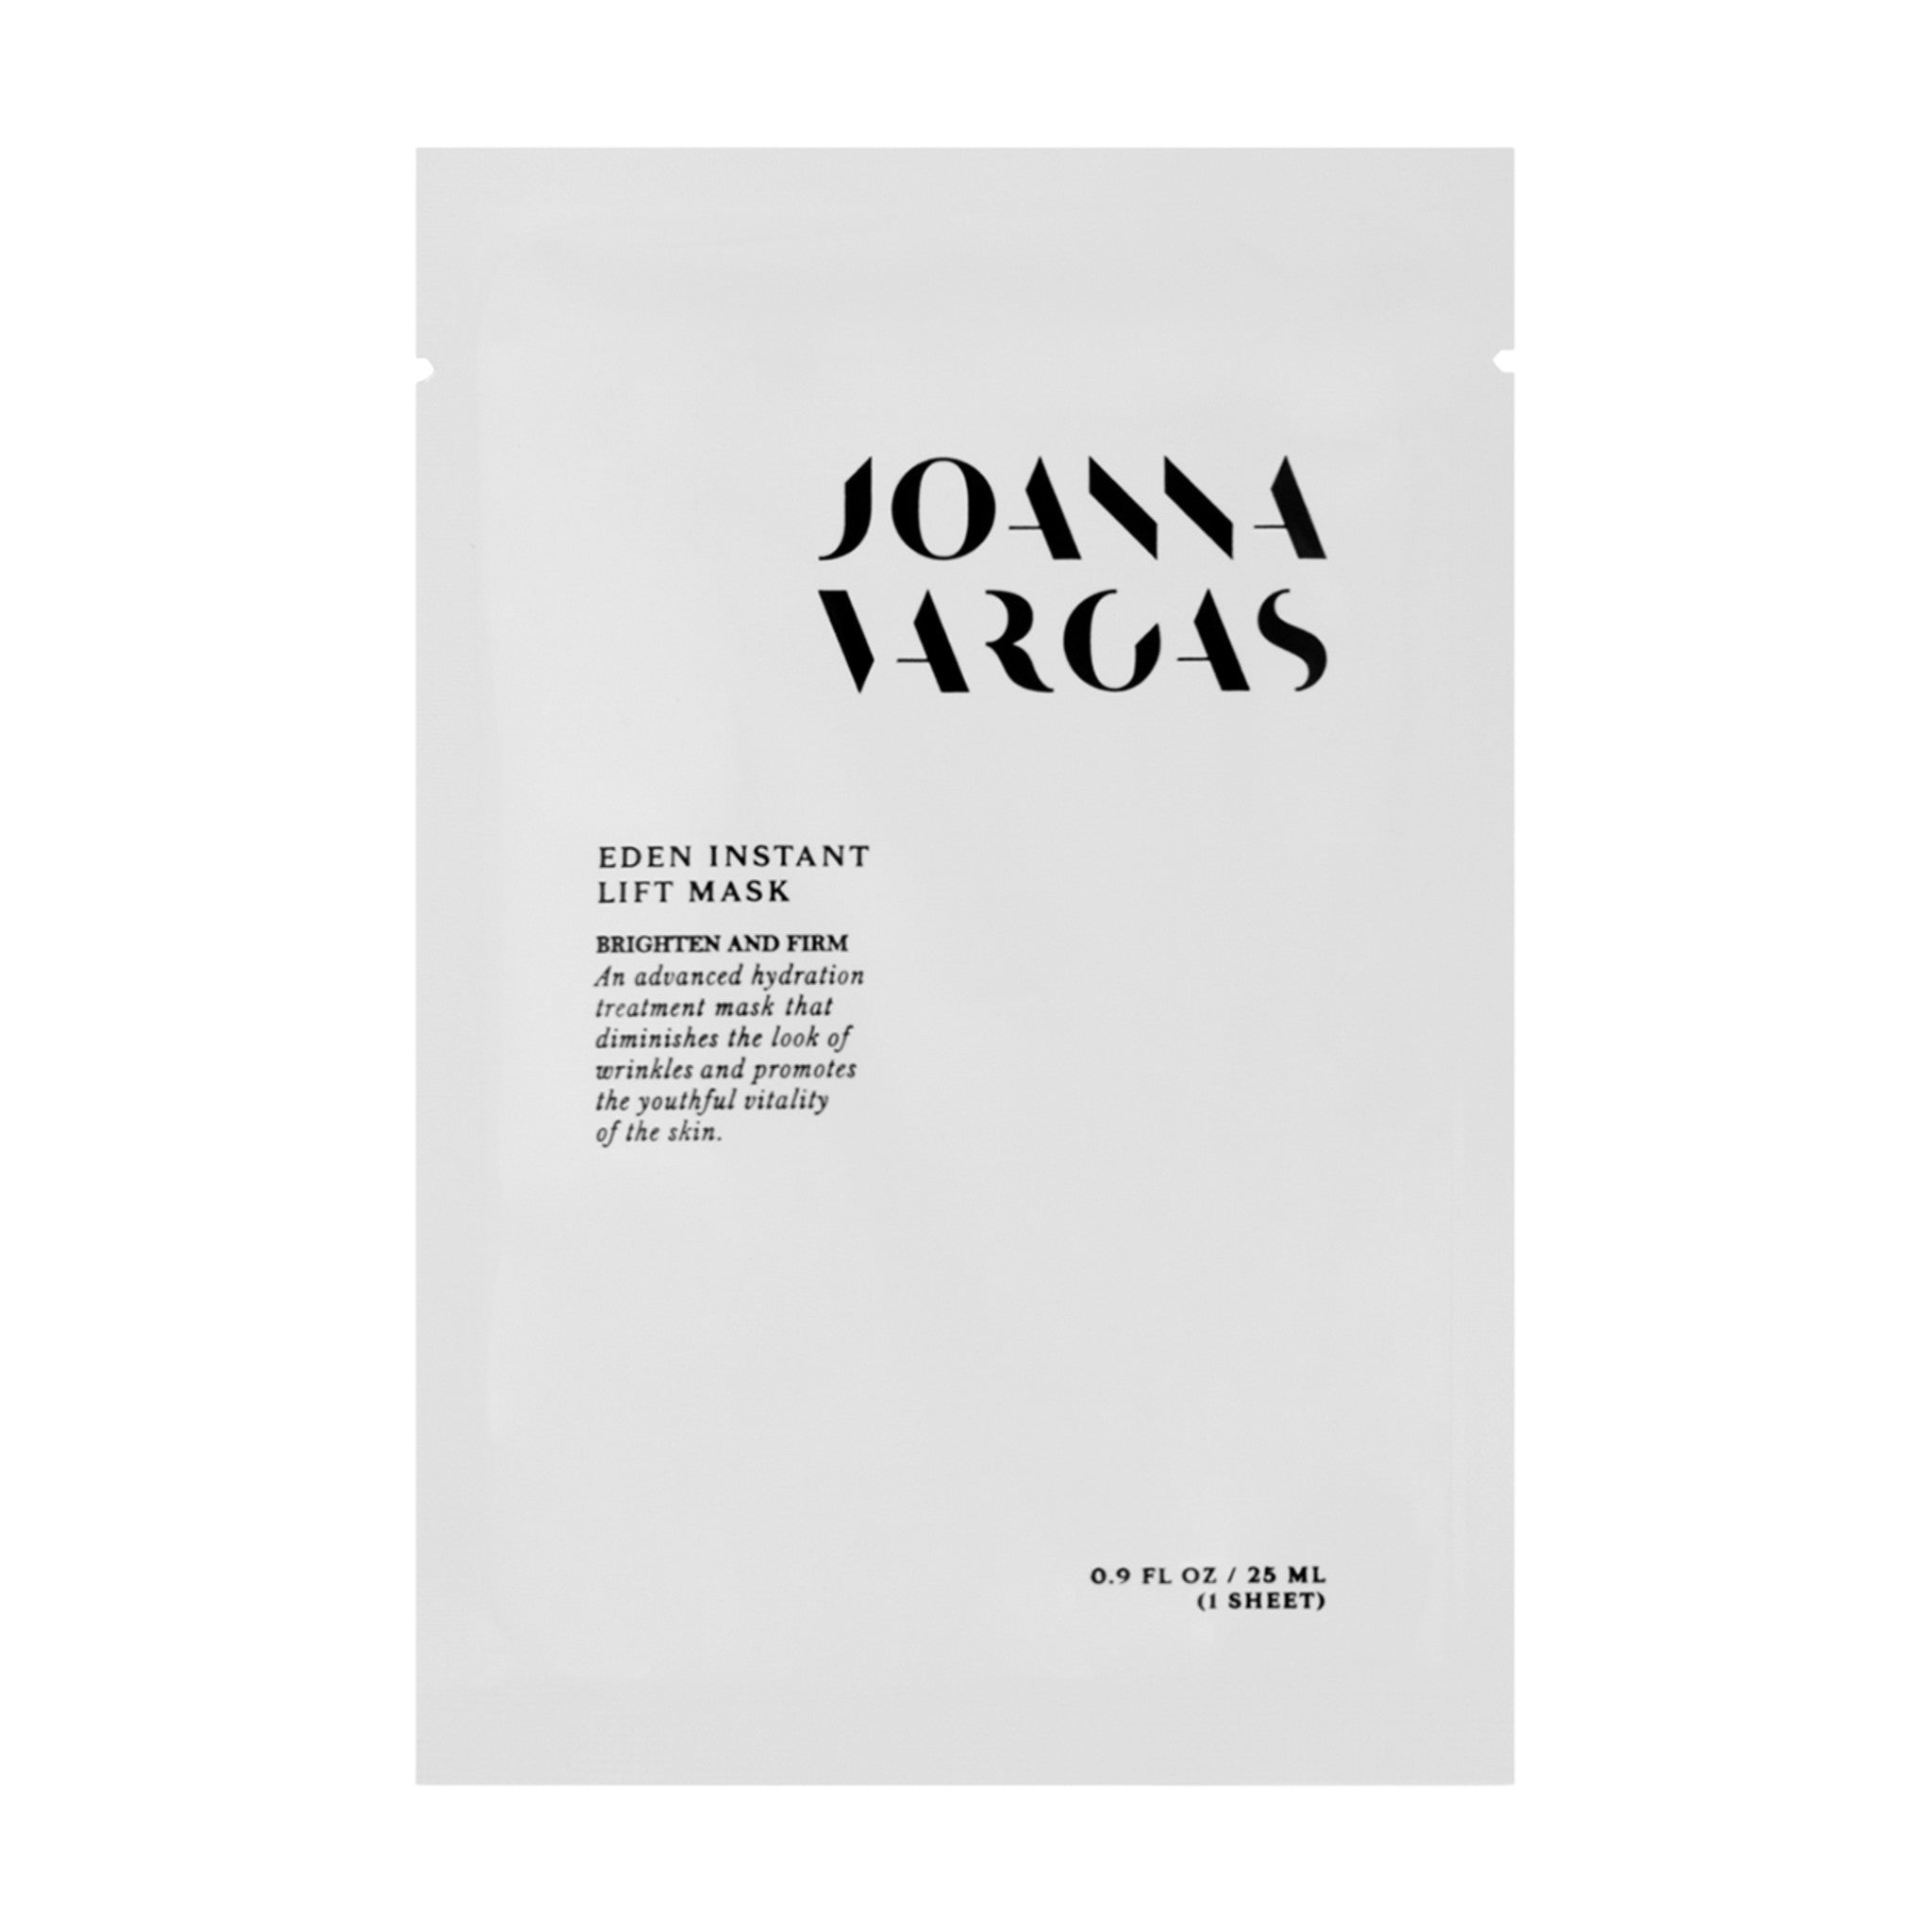 Joanna Vargas Eden Instant Lift Mask Size variant: 1 Treatment main image.